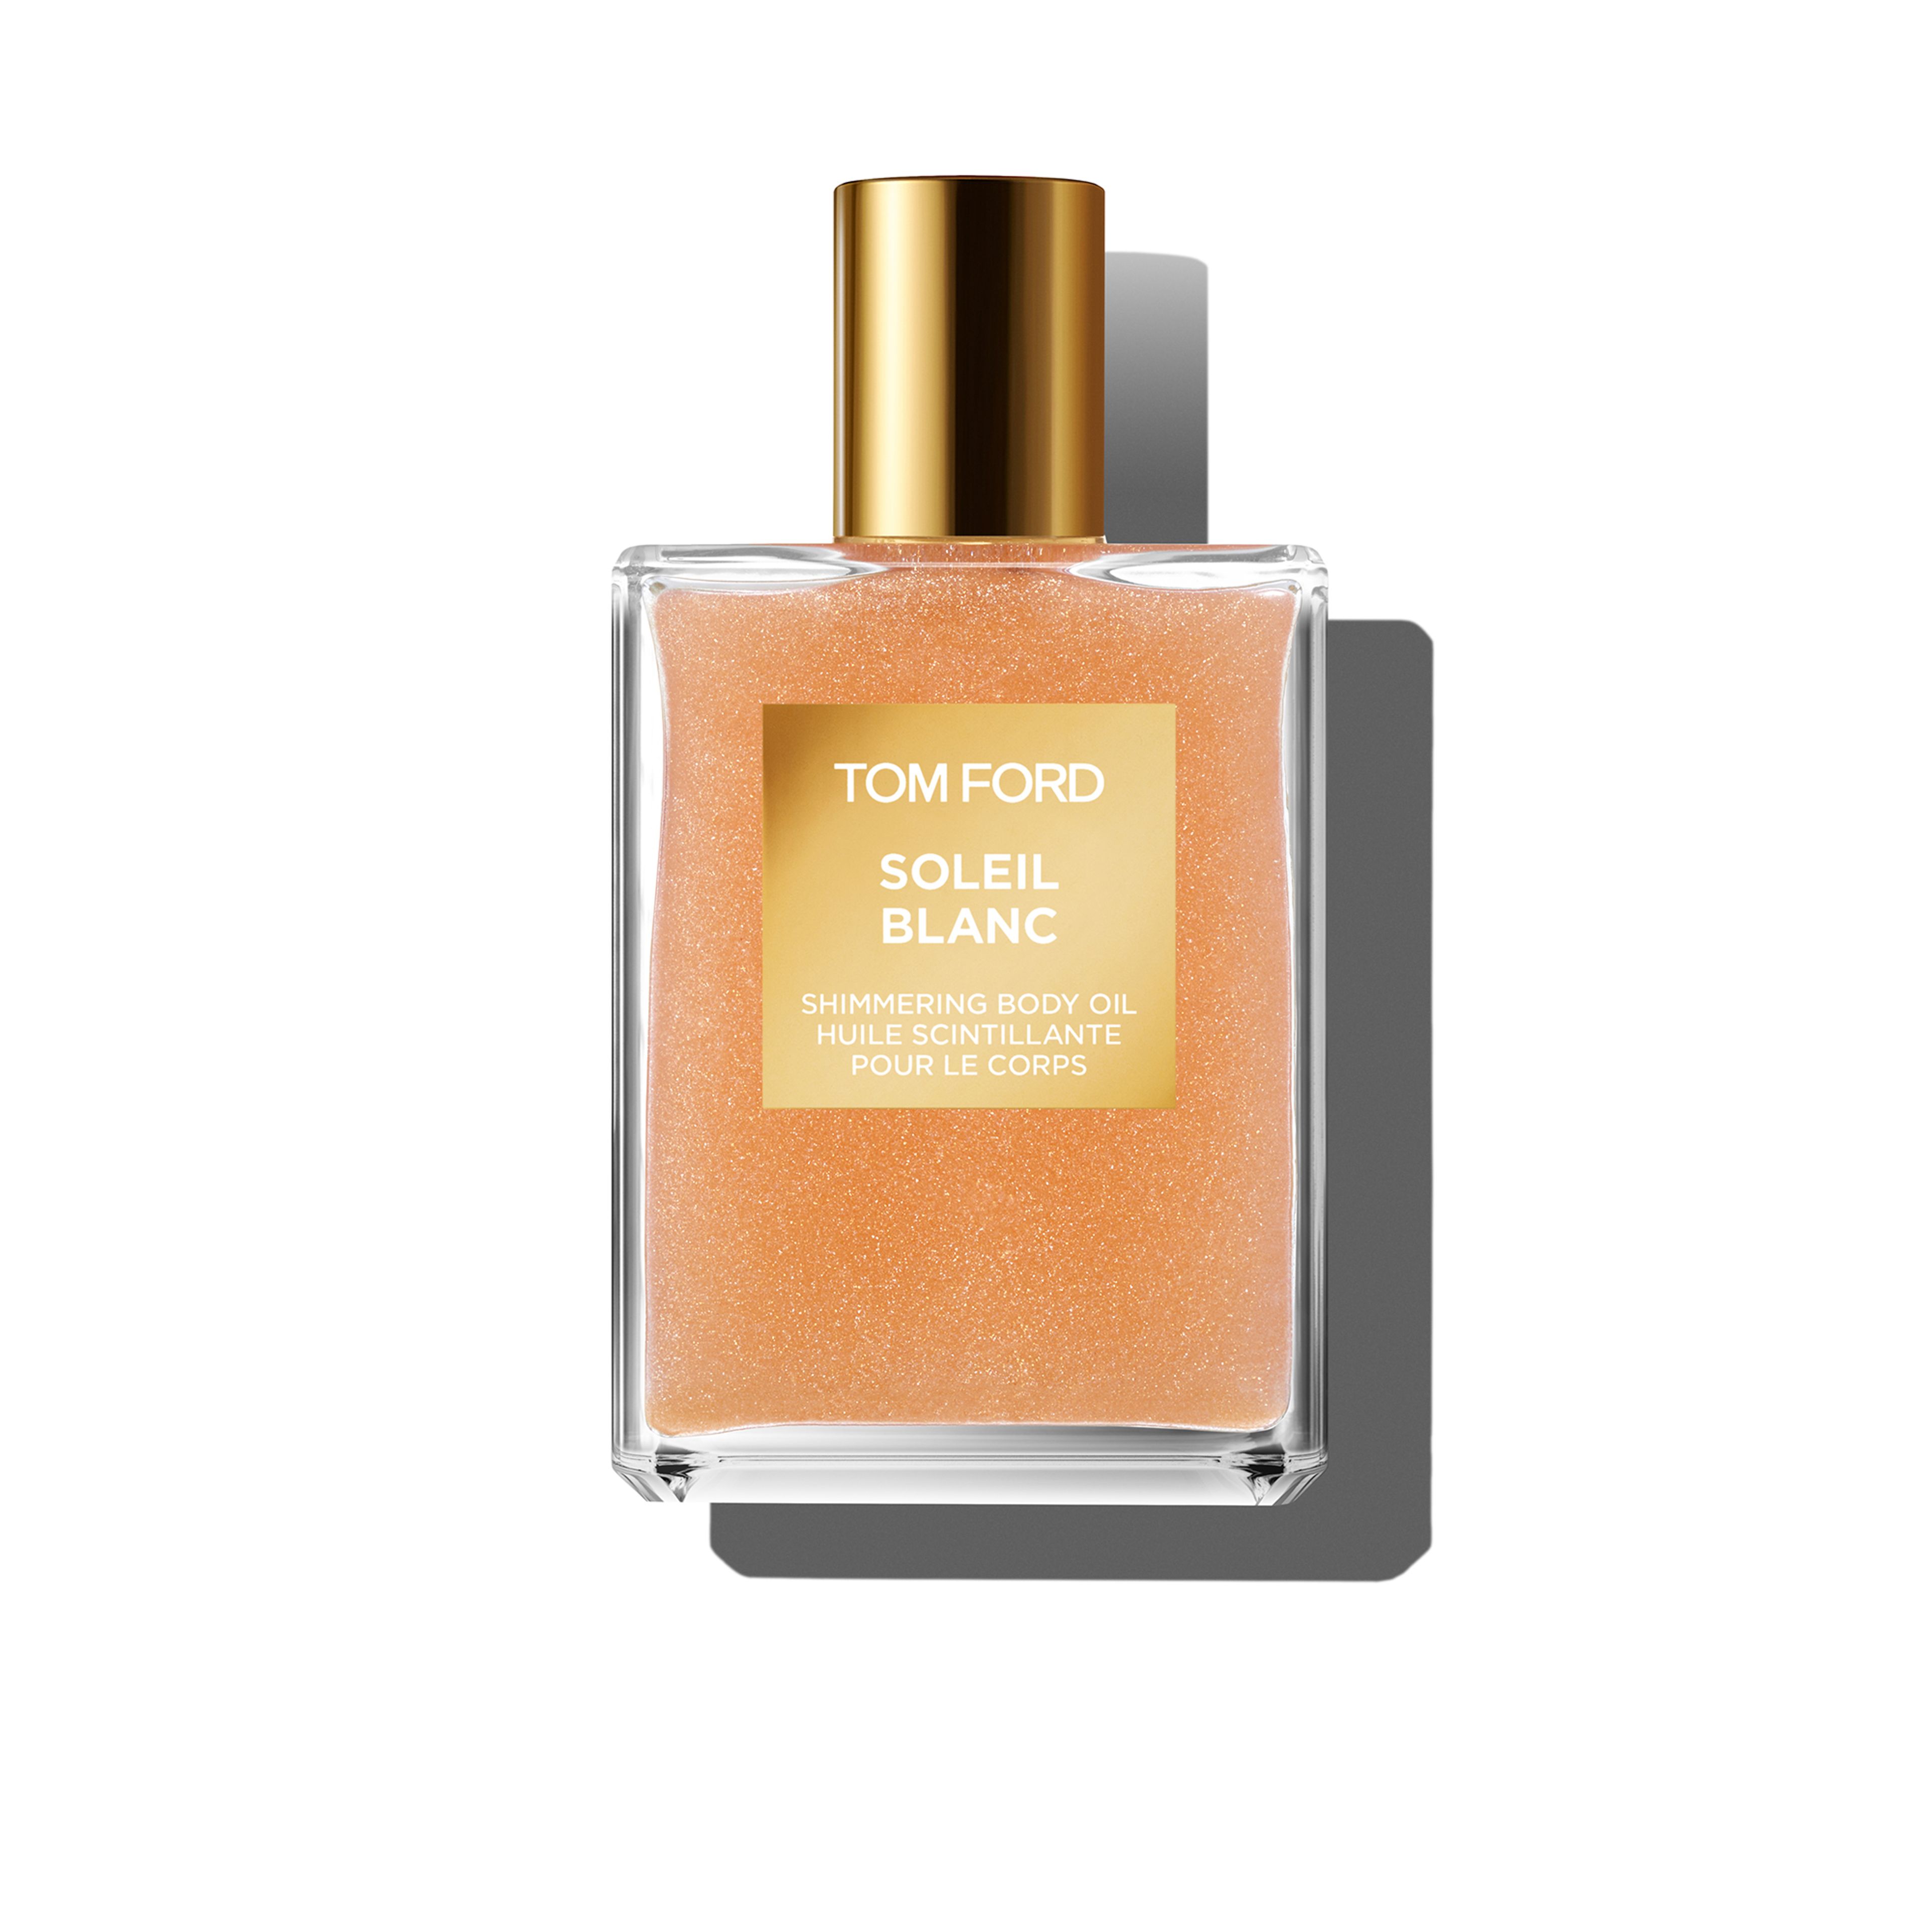 Tom Ford Soleil Blanc Shimmering Body Oil

shade: Rose Gold 2